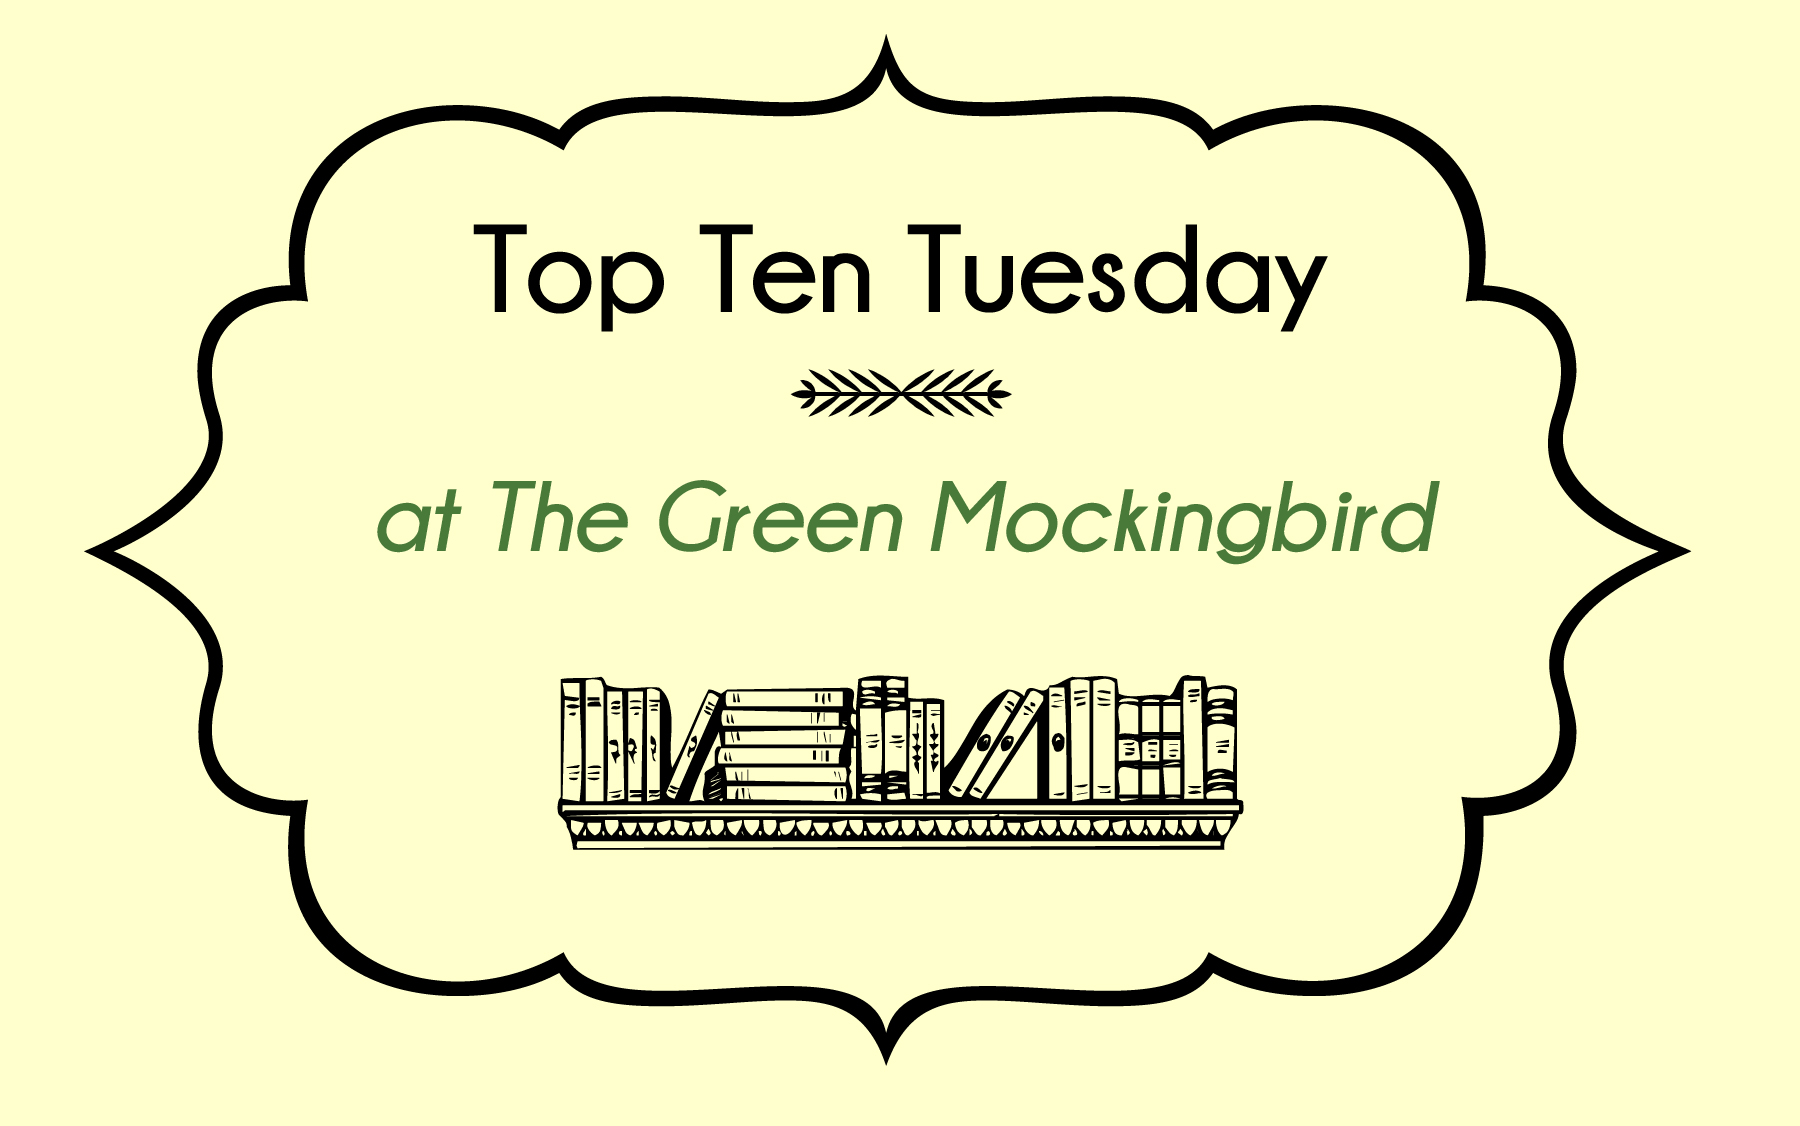 Top Ten Tuesday at The Green Mockingbird